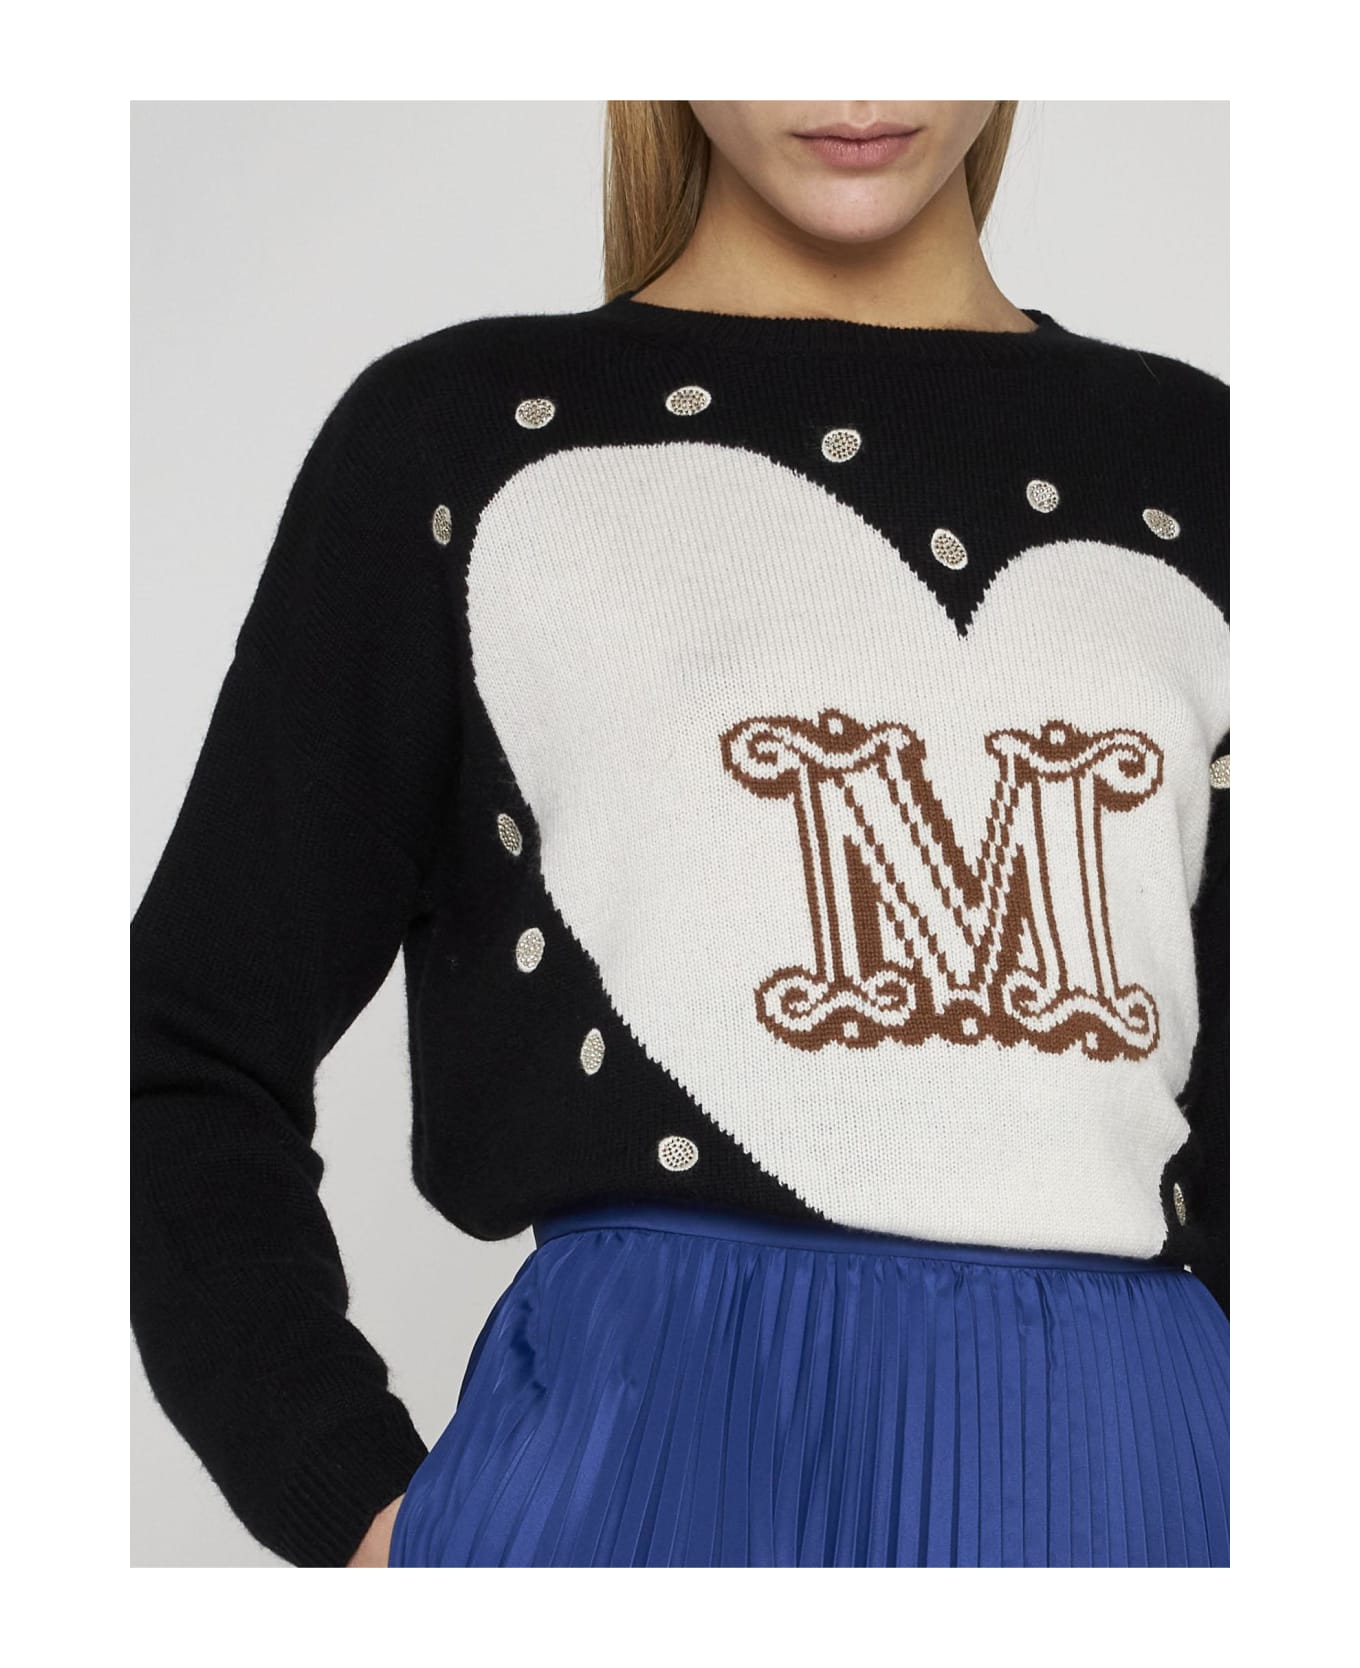 Max Mara Panaria Logo Wool And Cashmere Sweater - 014